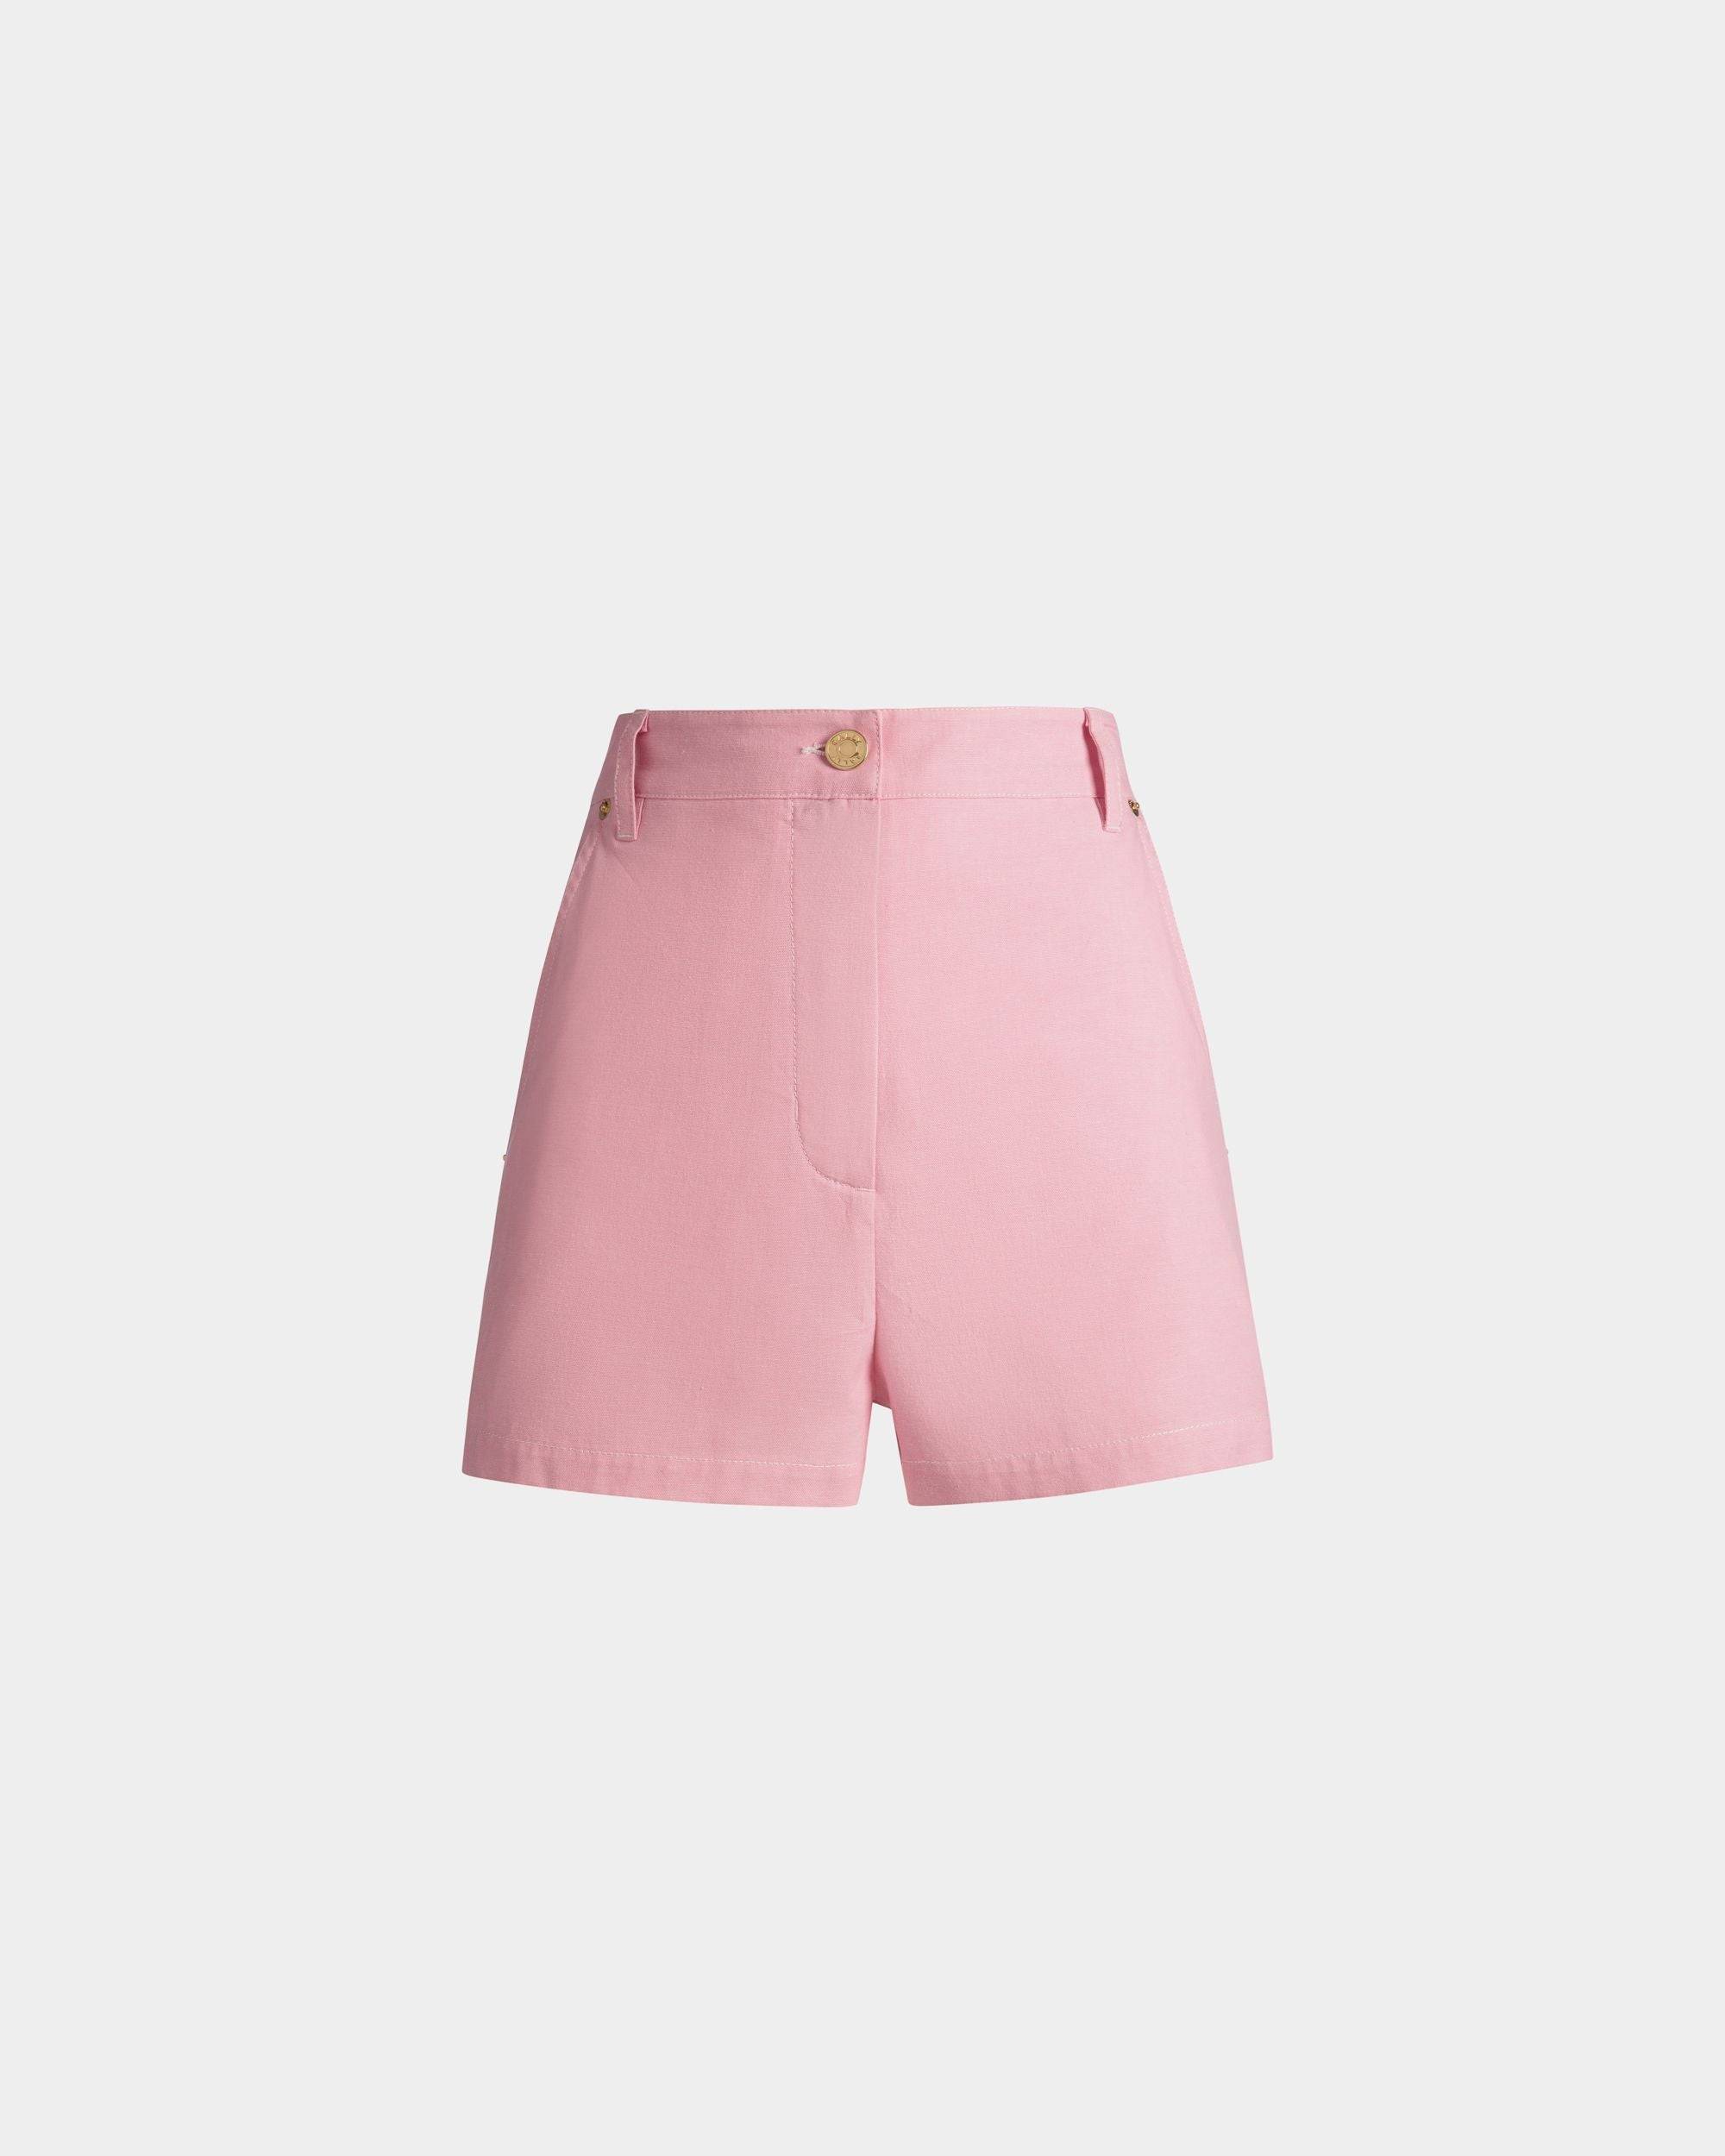 Women's Shorts in Pink Cotton Denim | Bally | Still Life Front